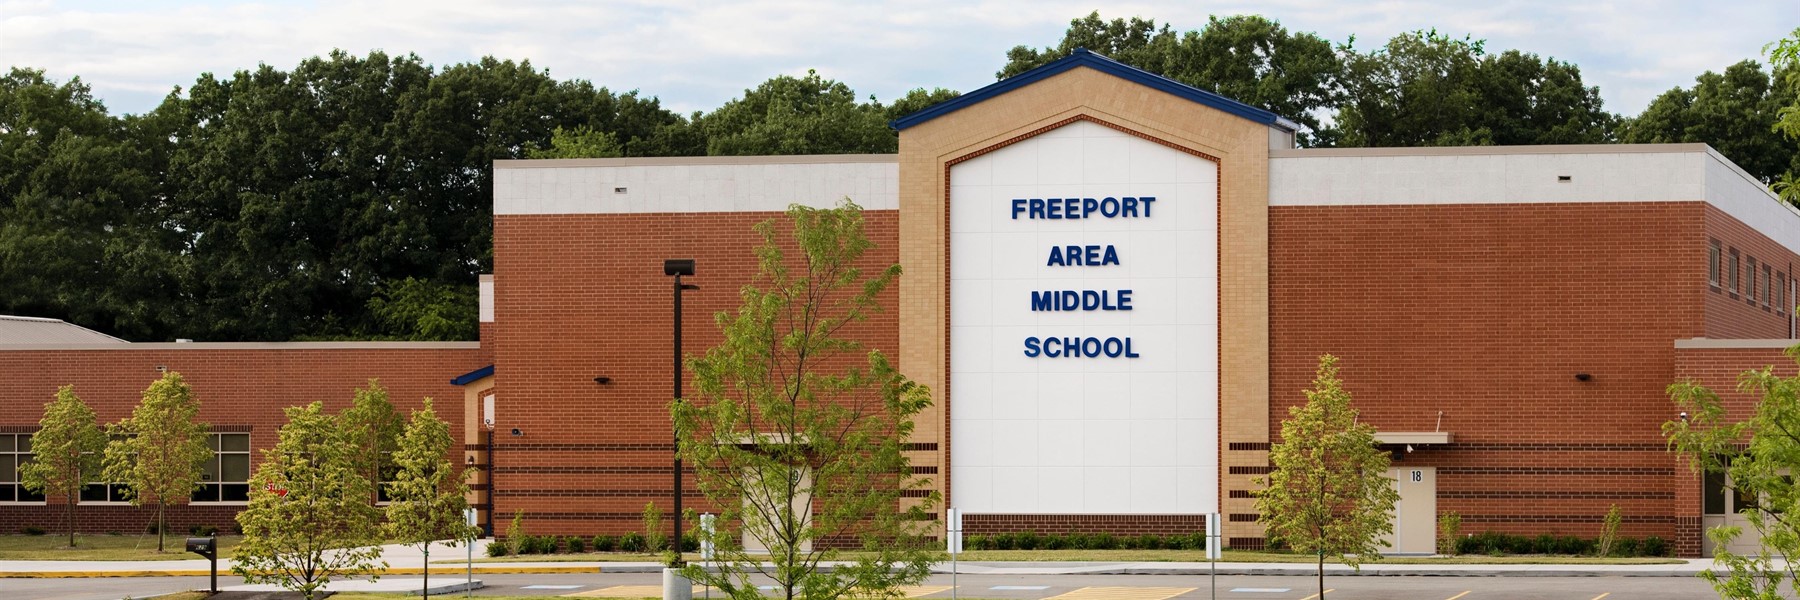 Freeport Area Middle School